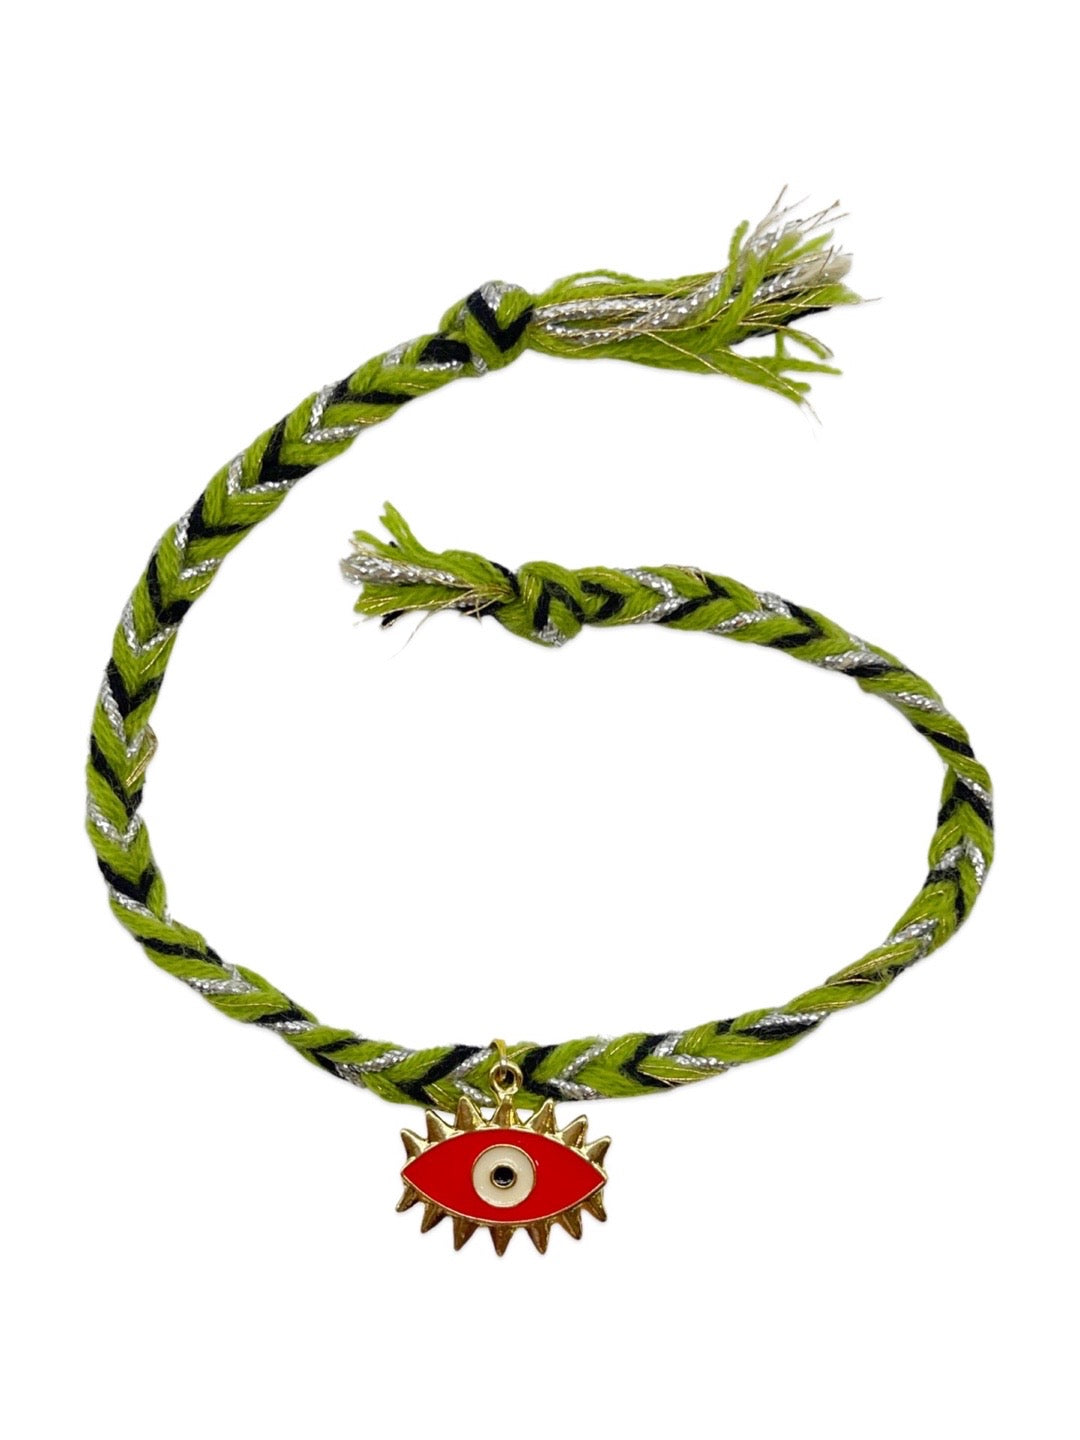 Evil Eye Knotted String Green Spiritual Bracelet For Protection, Wisdom,  Good Luck, ETC. - Lazaro Brand Spiritual Store